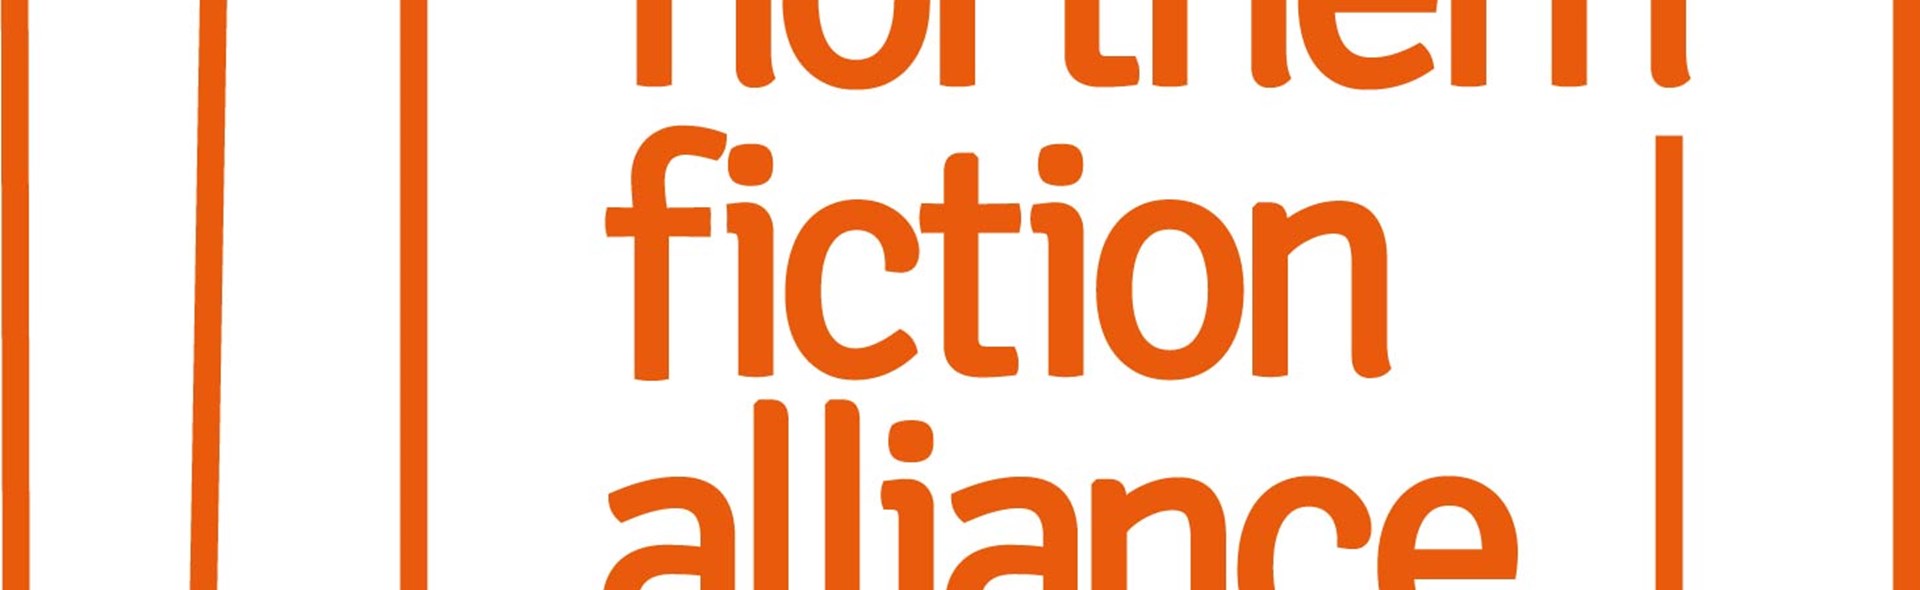 Northern Fiction Alliance Roadshow